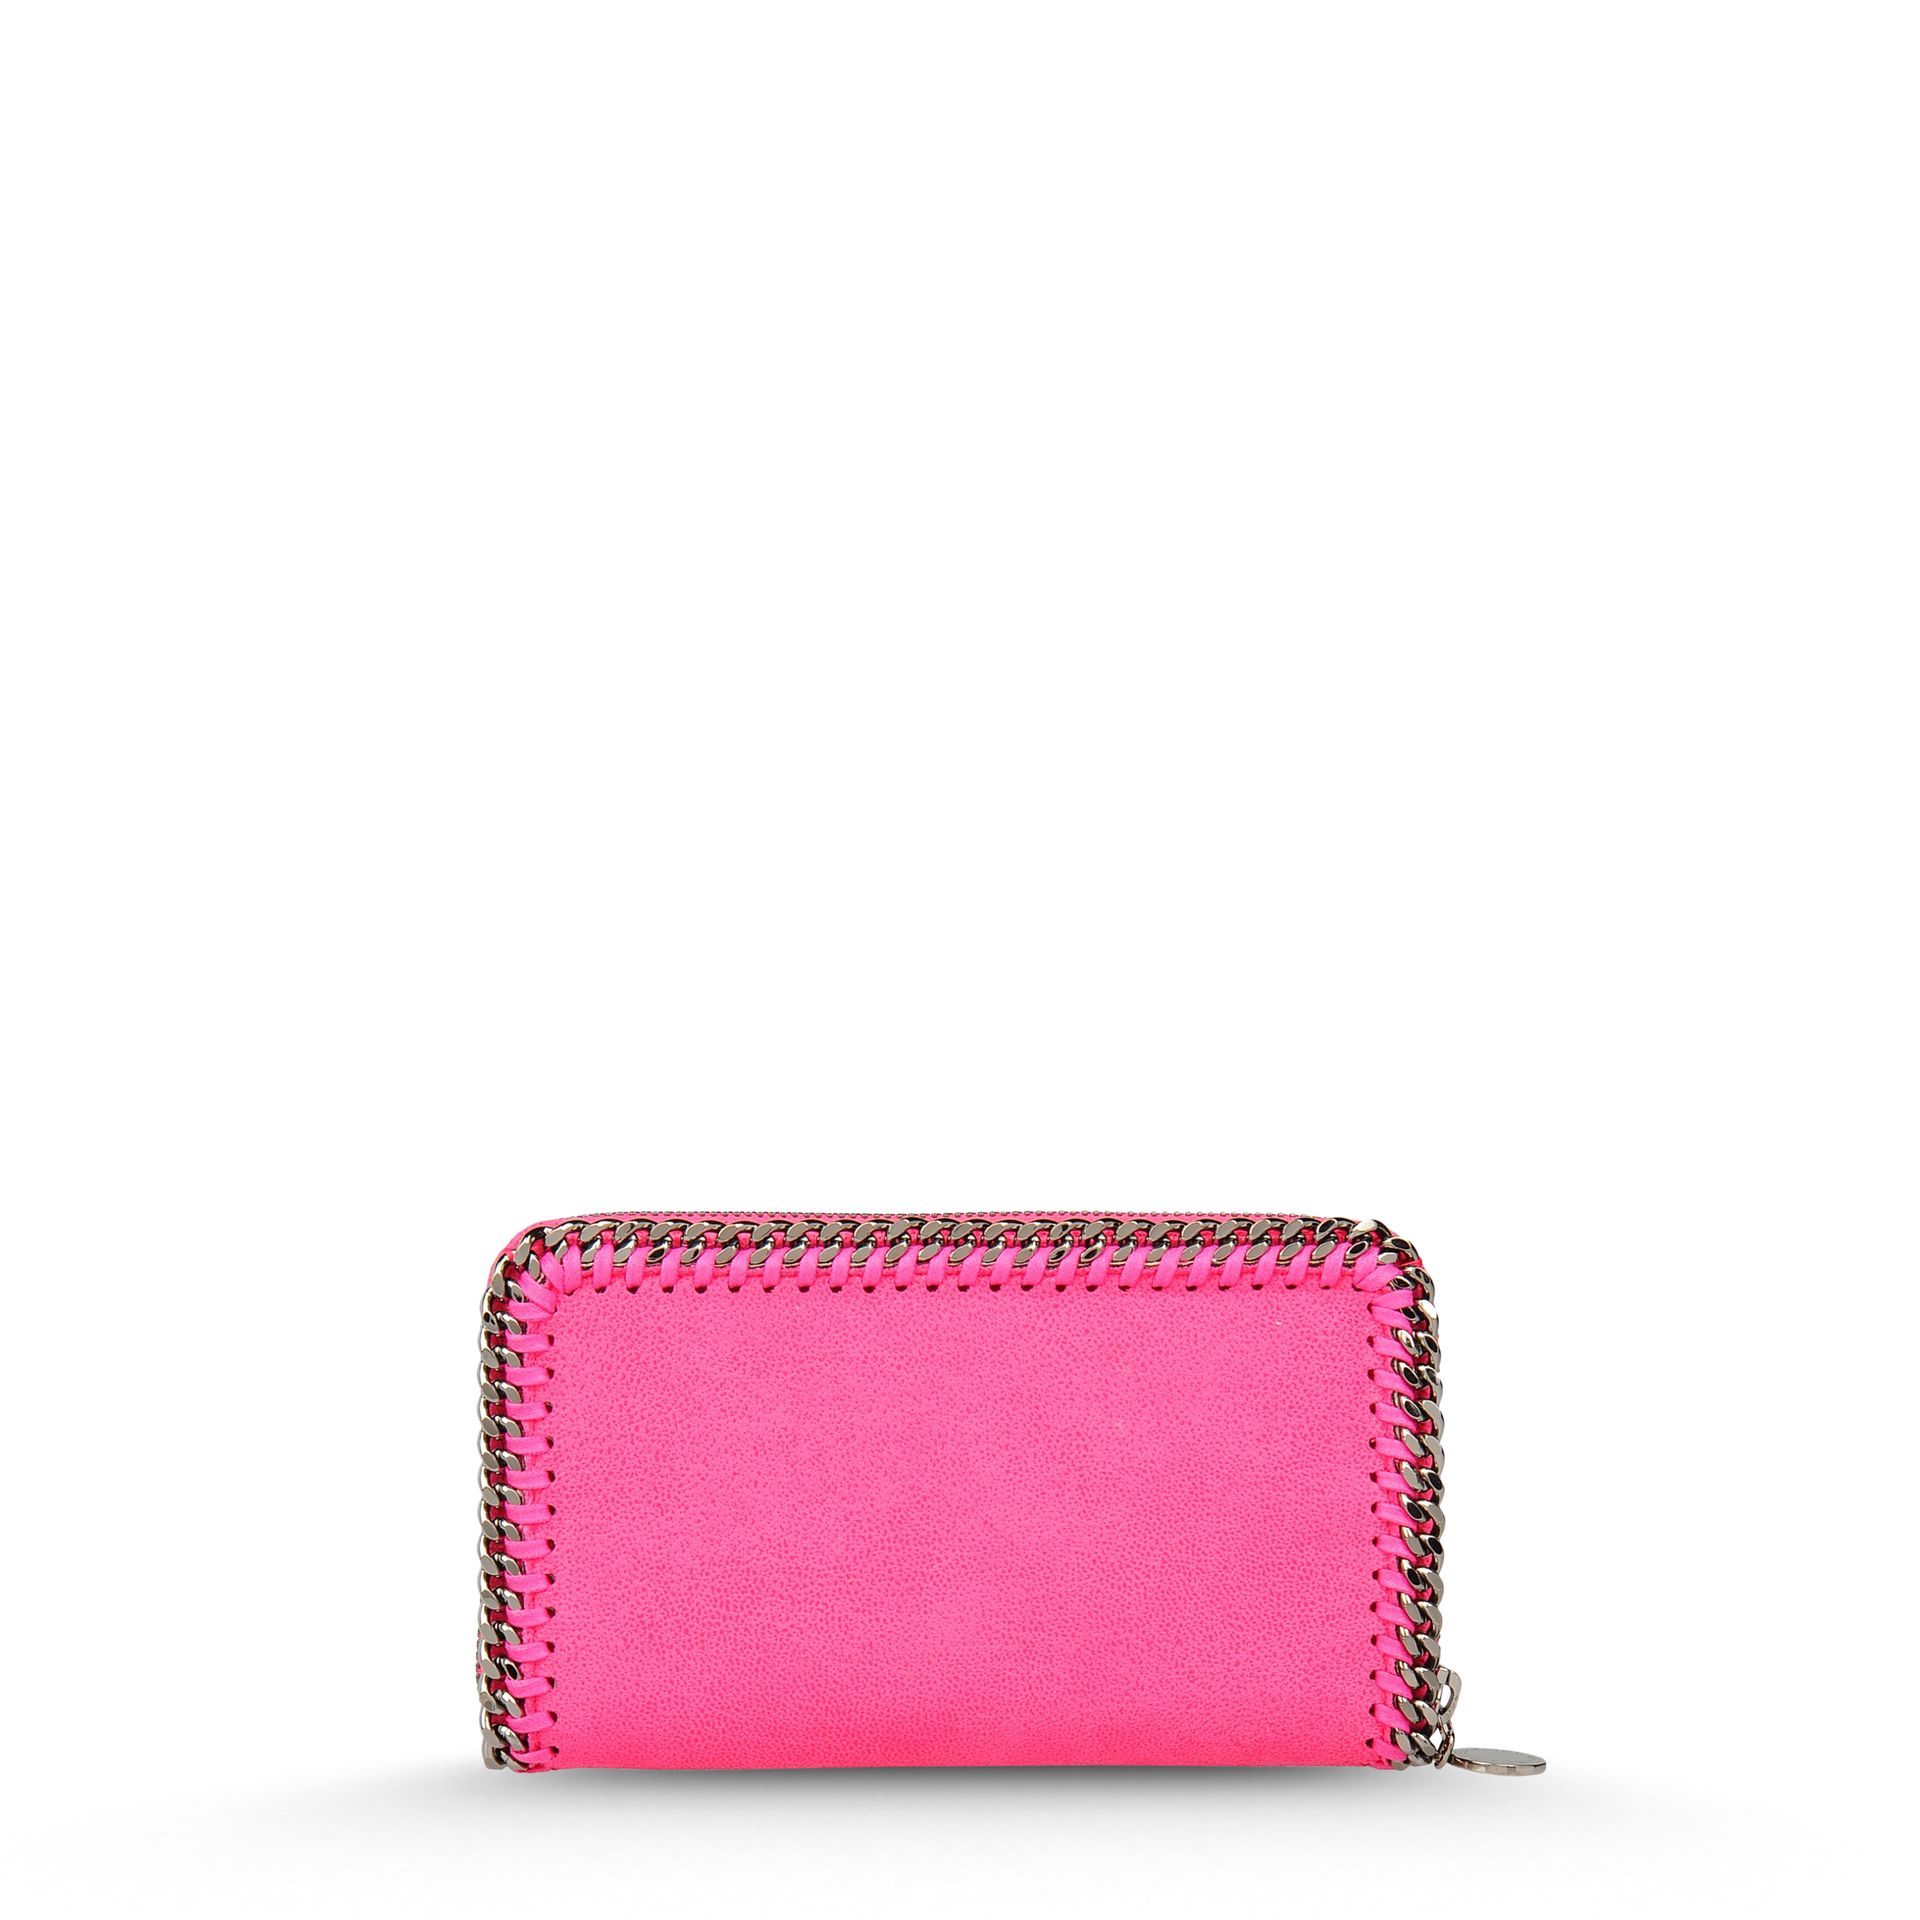 Lyst - Stella Mccartney Falabella Shaggy Deer Zip Wallet in Pink